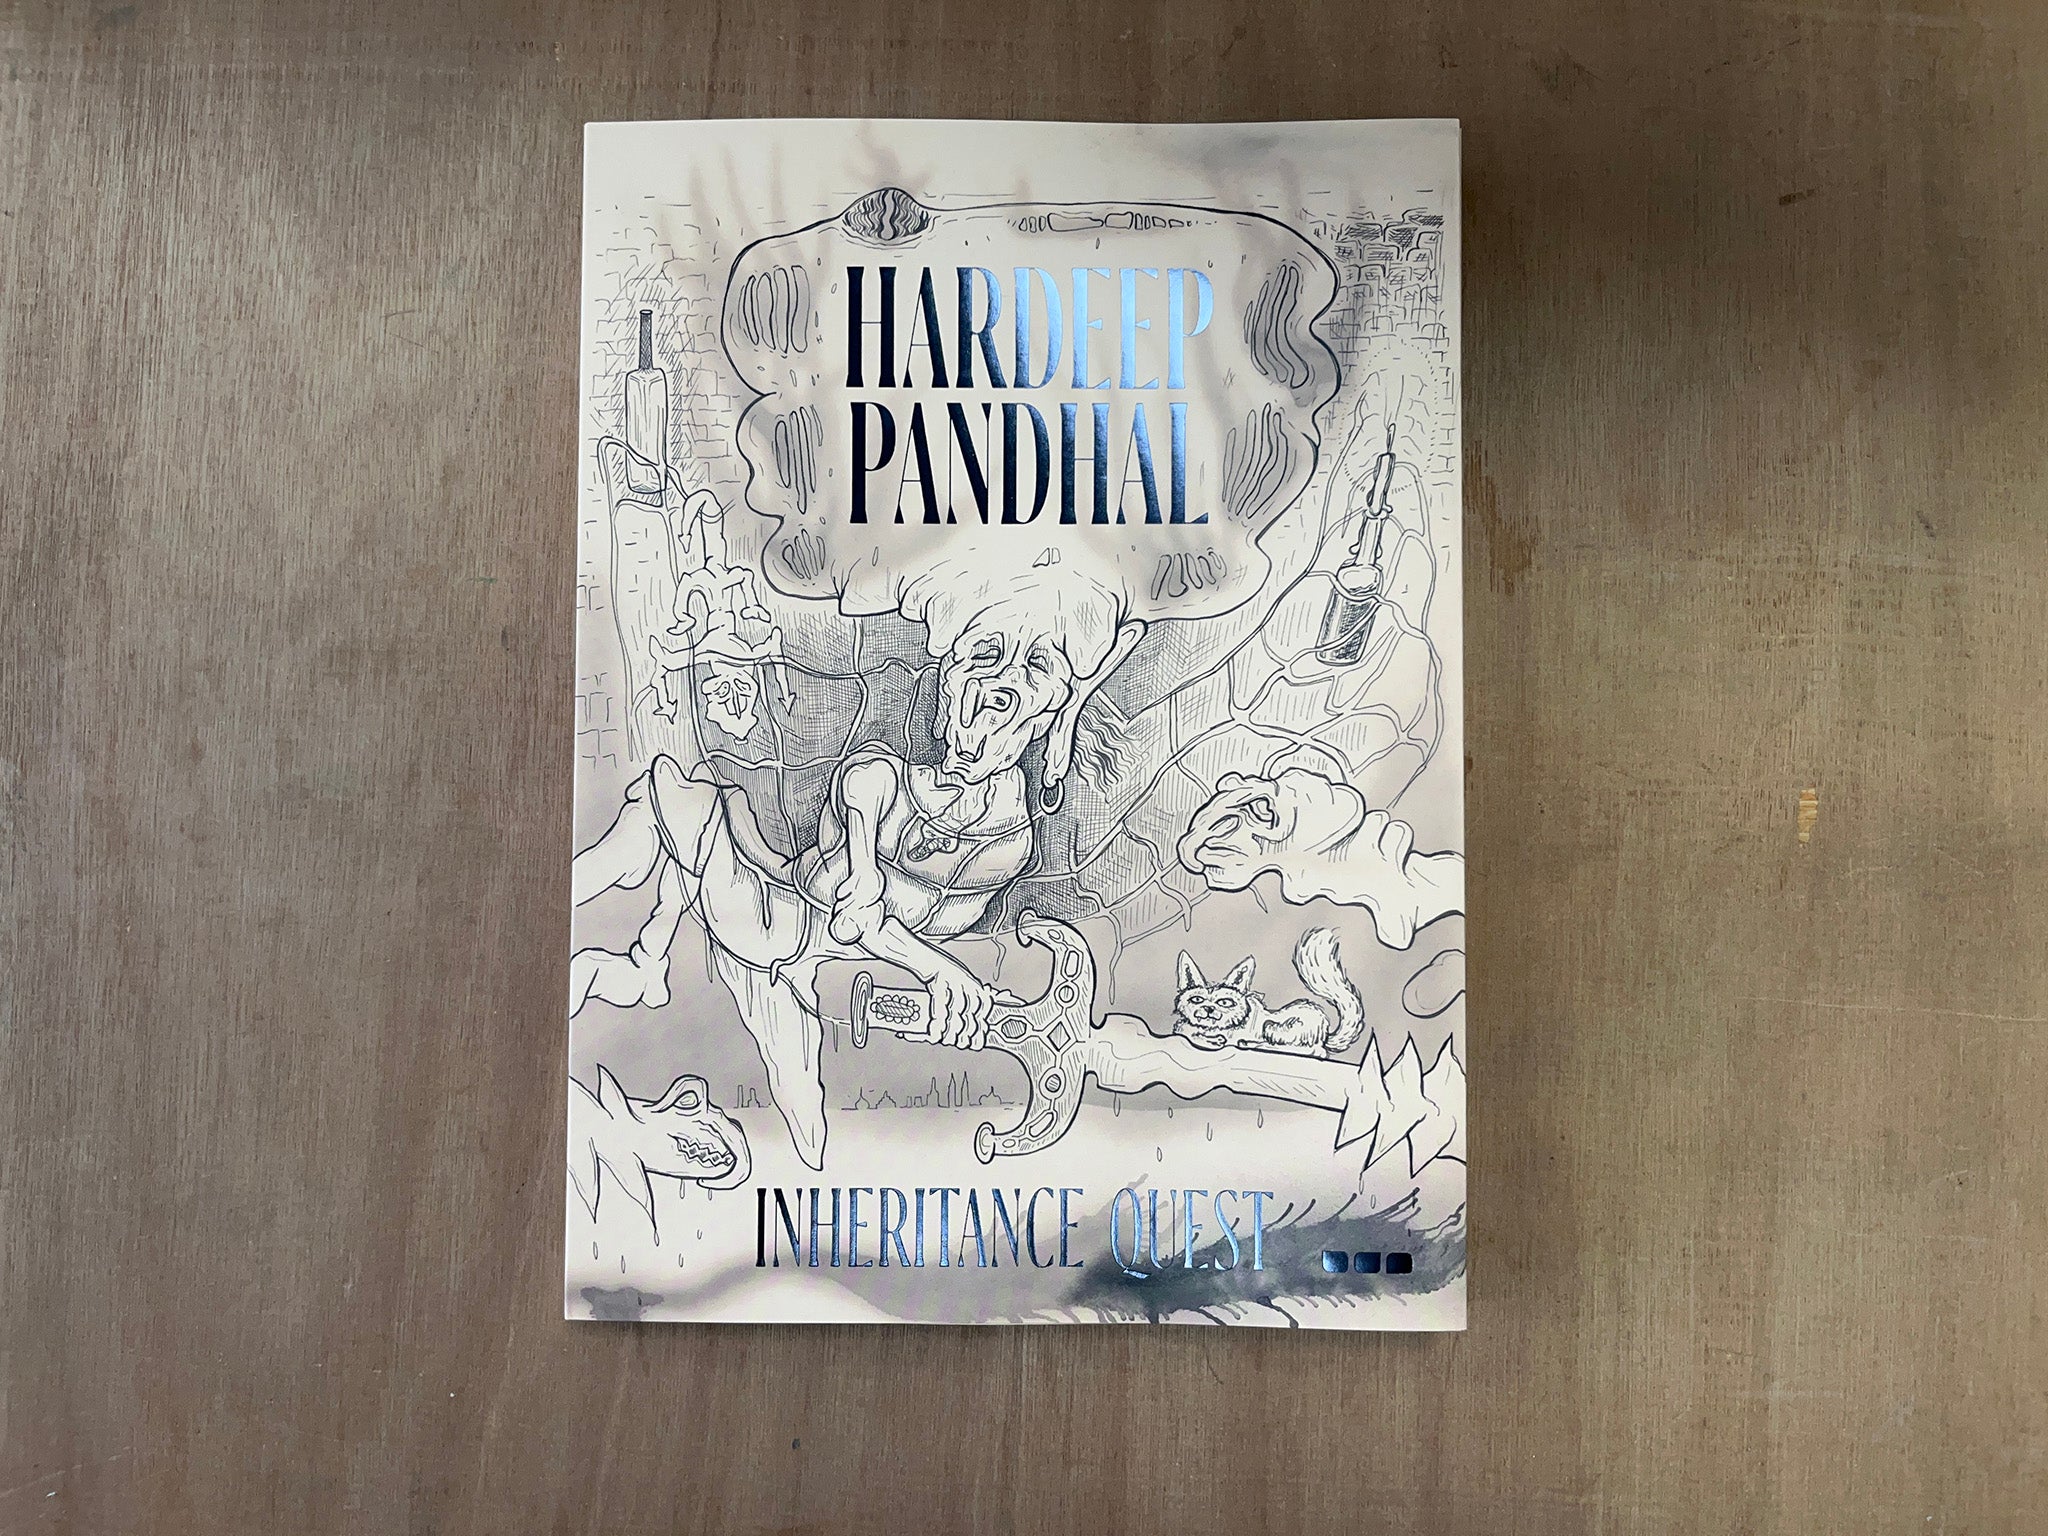 INHERITANCE QUEST by Hardeep Pandhal